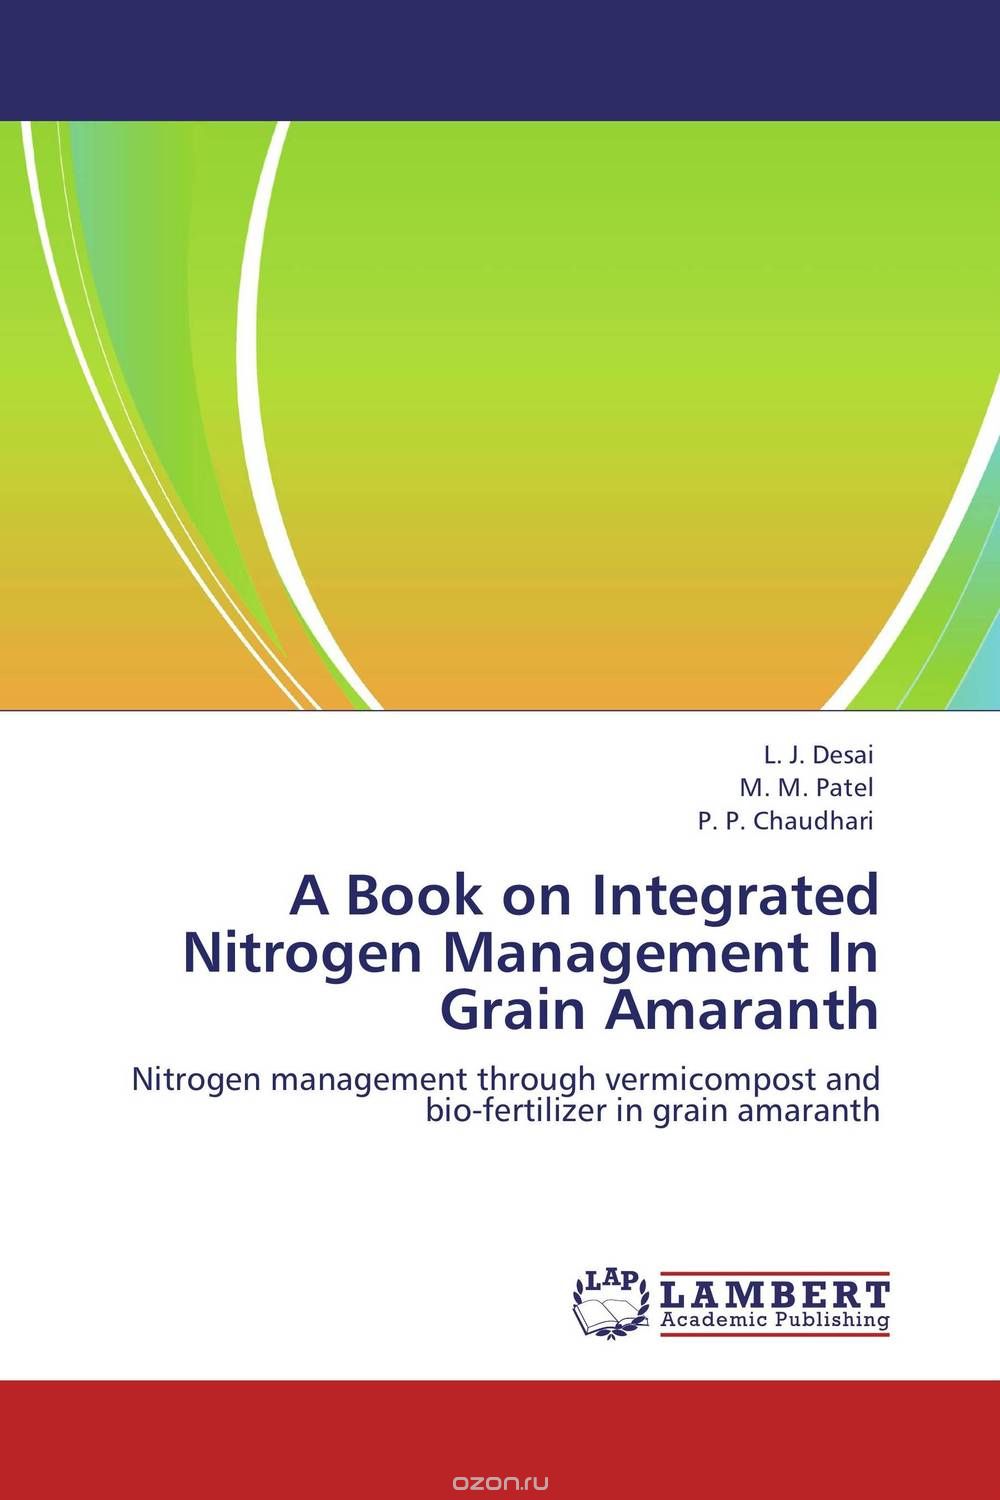 Скачать книгу "A Book on Integrated Nitrogen Management In Grain Amaranth"